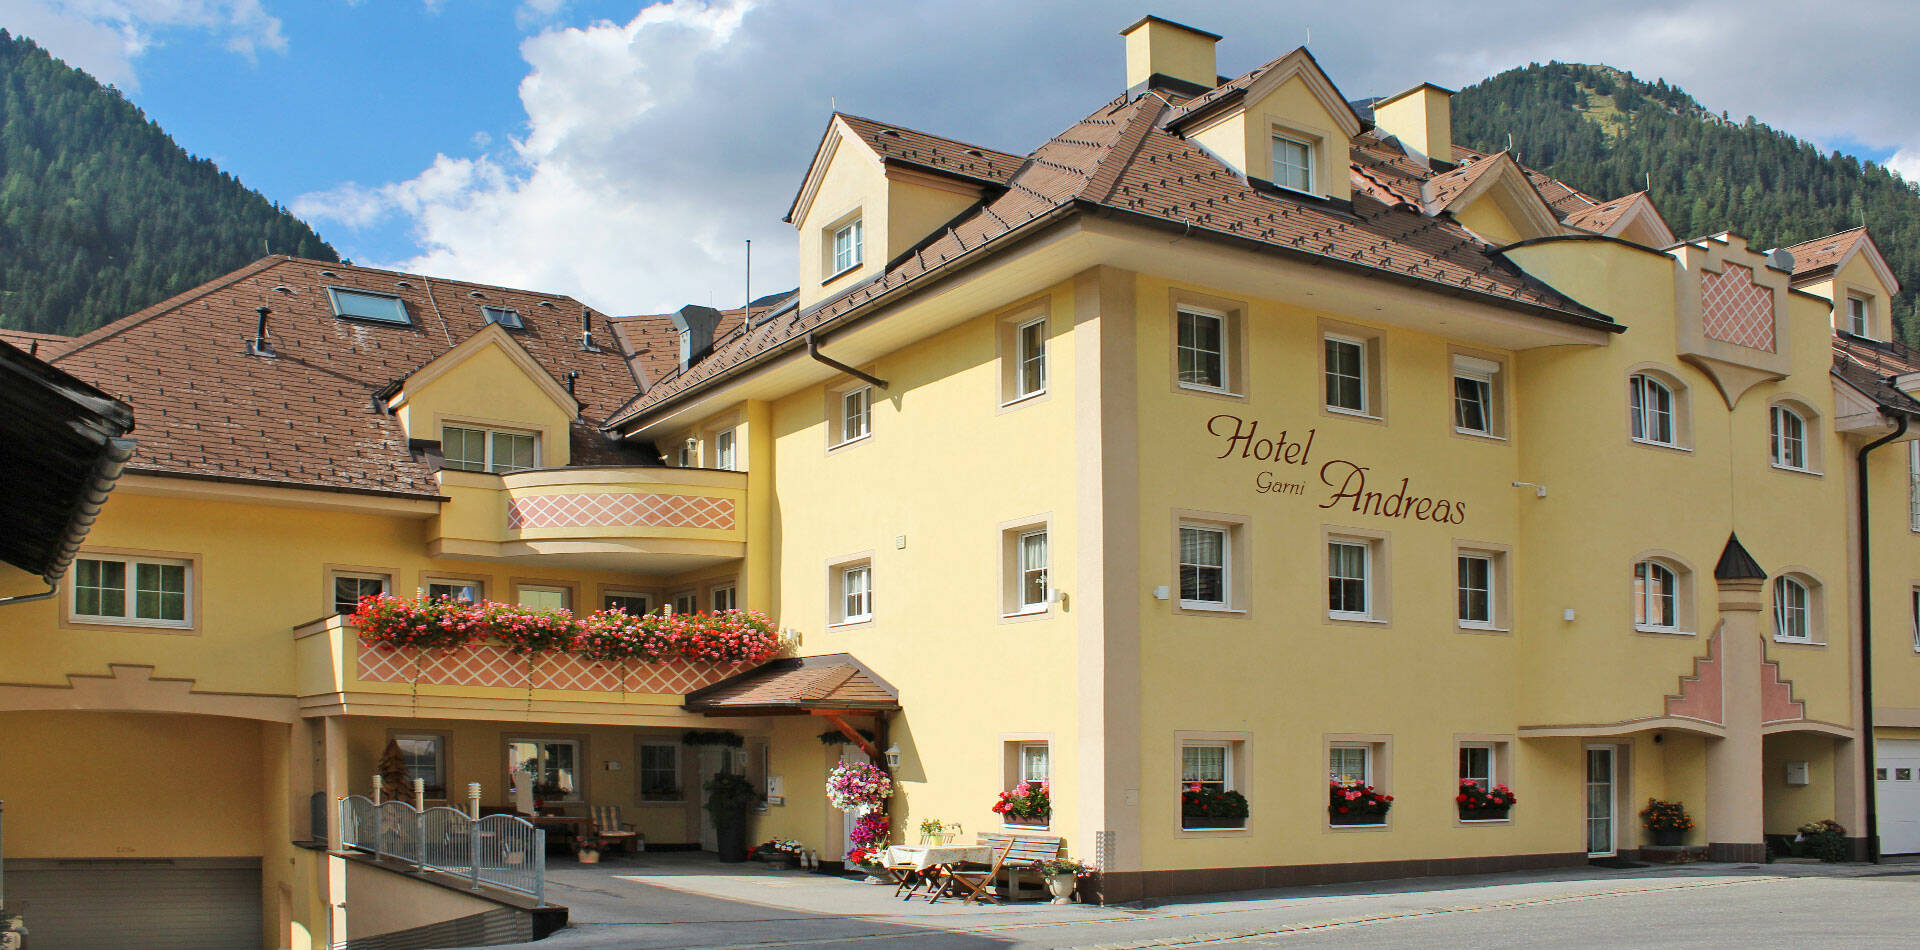  Hotel Garni Andreas in Ischgl